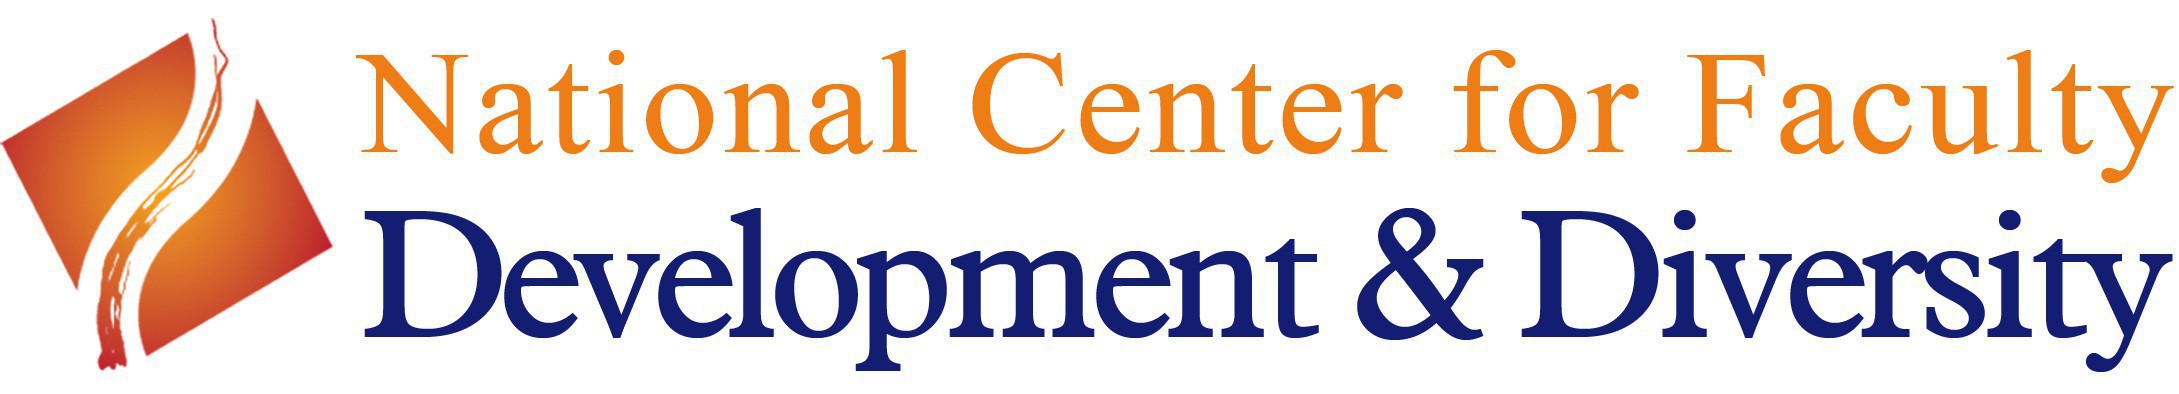 ncfdd-logo.jpg